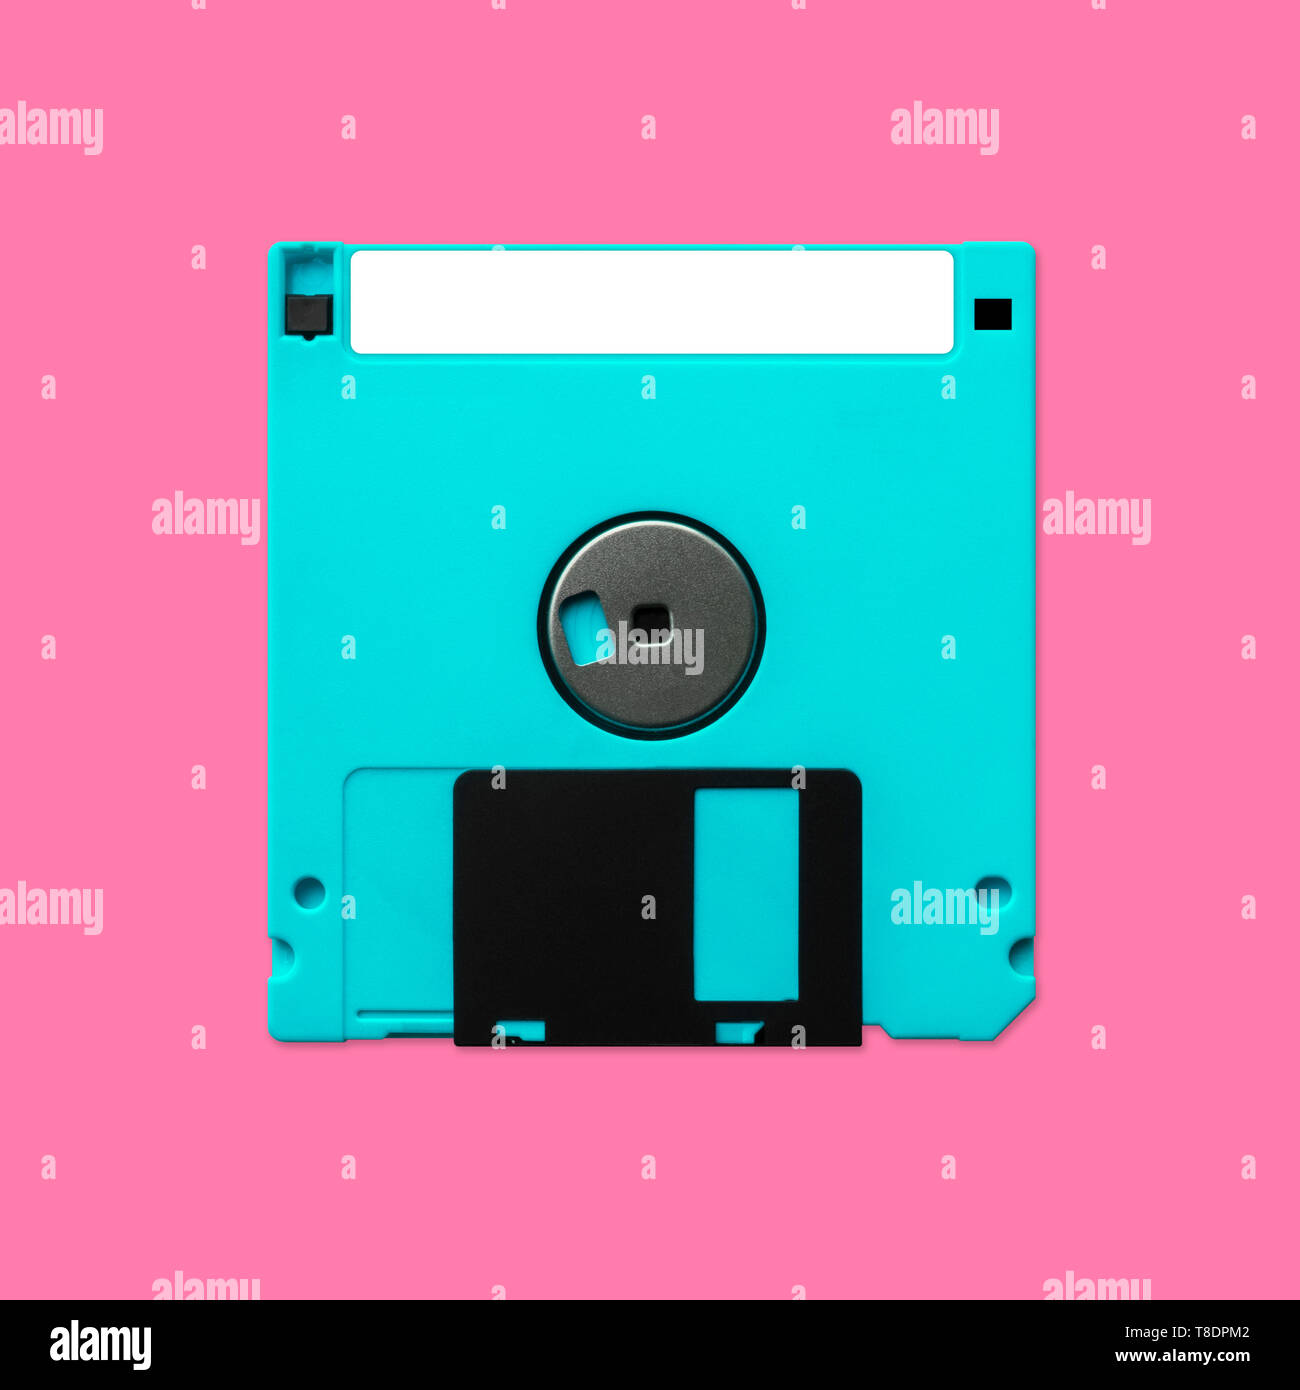 Floppy disk da 3,5 pollici indietro Nostalgia, isolato e presentato in vigorosi colori pastello Foto Stock